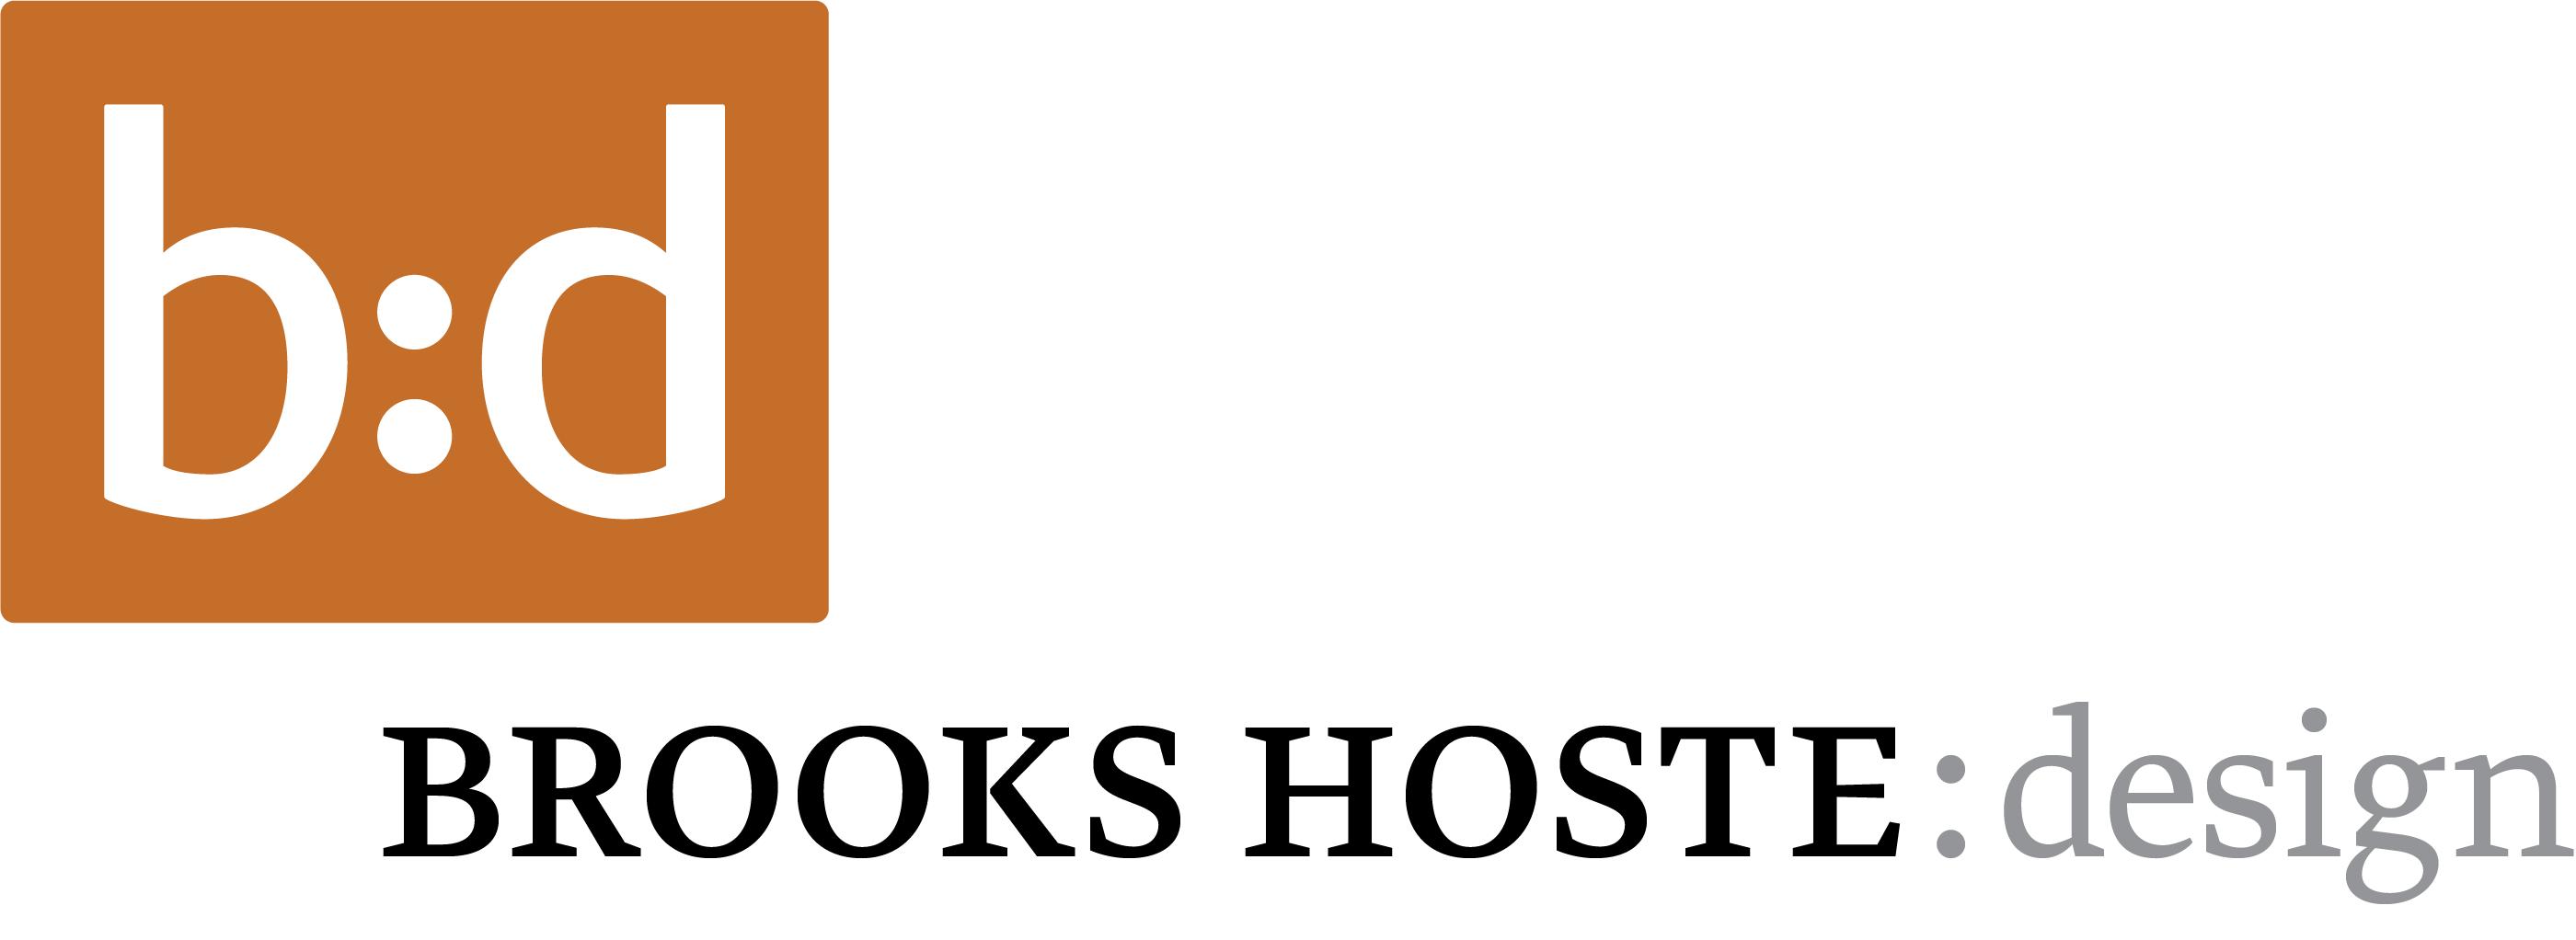 Brooks Hoste Design